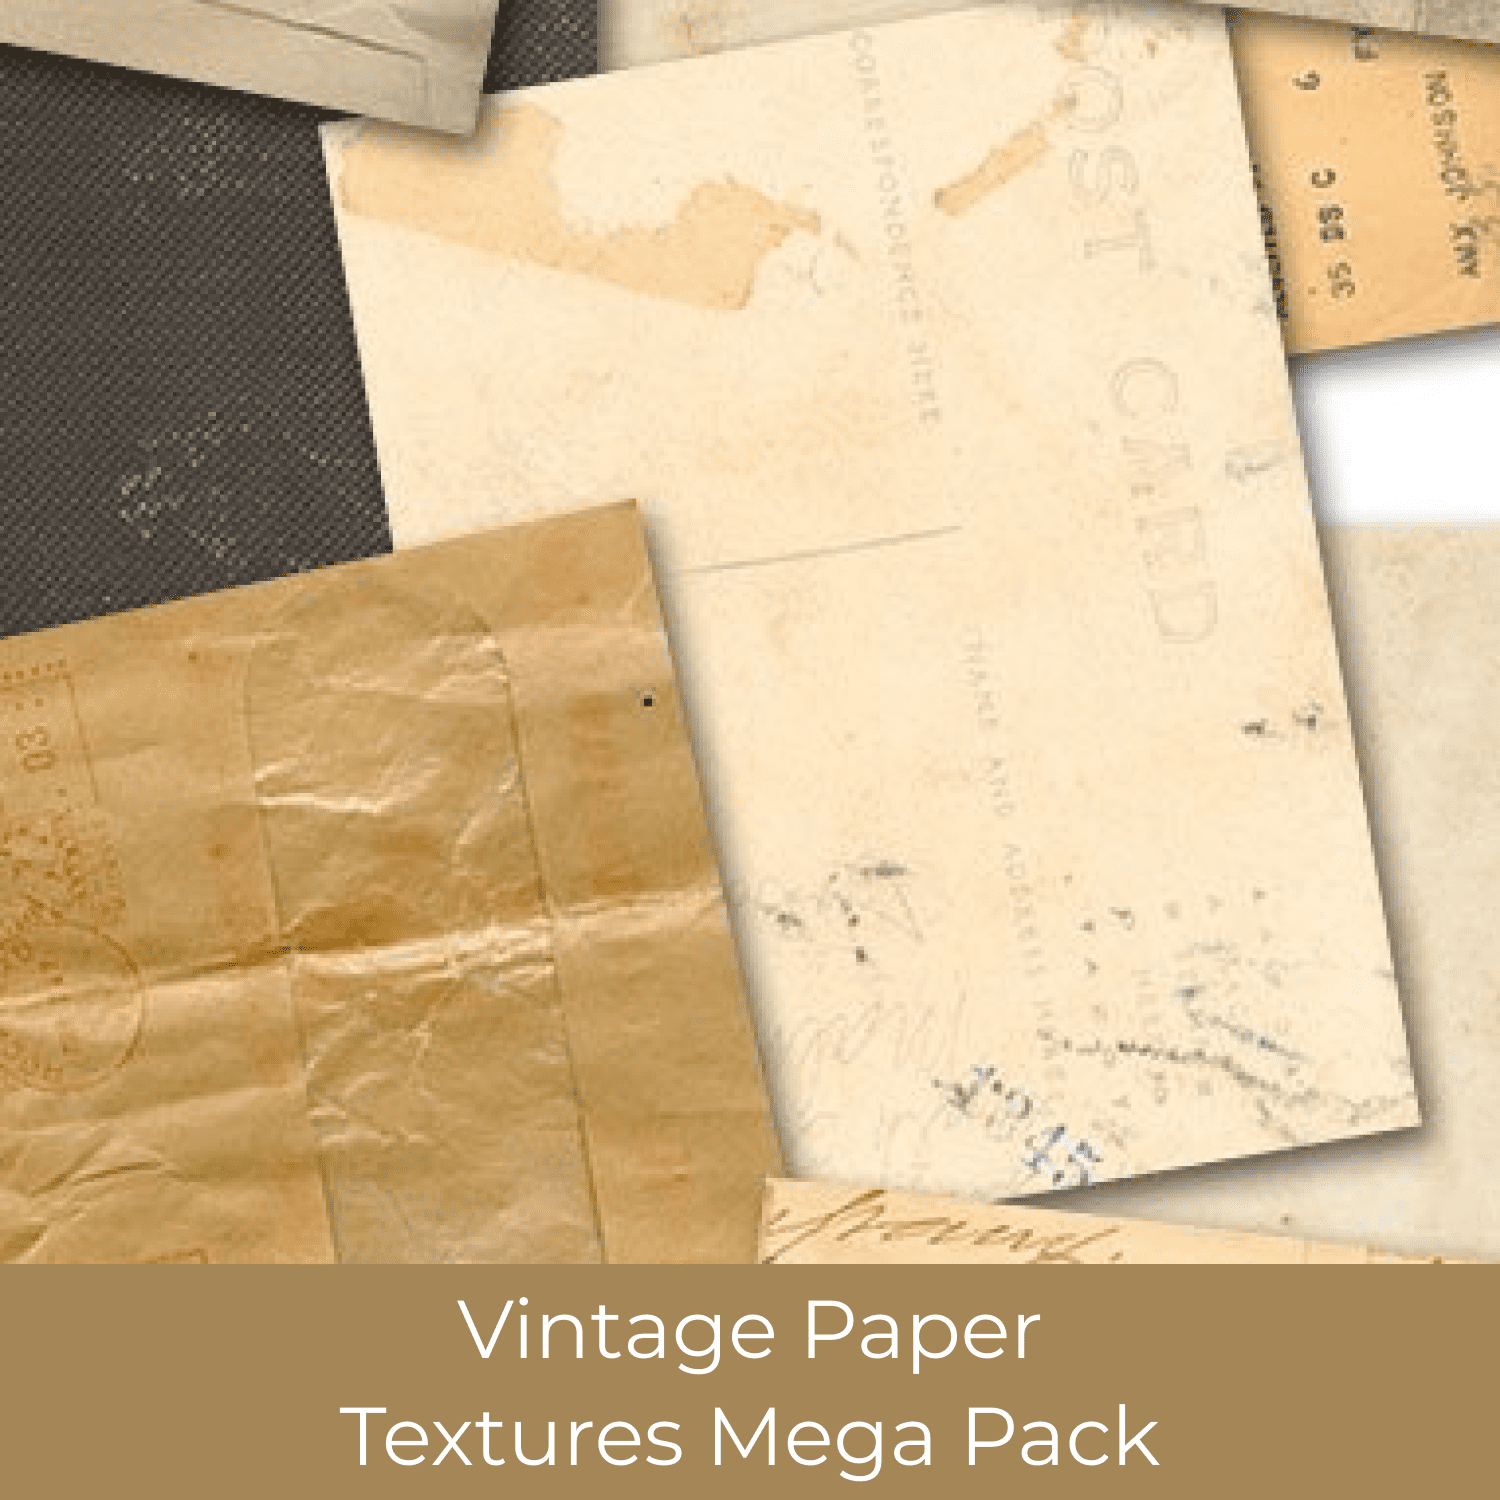 Vintage Paper Textures Mega Pack cover.